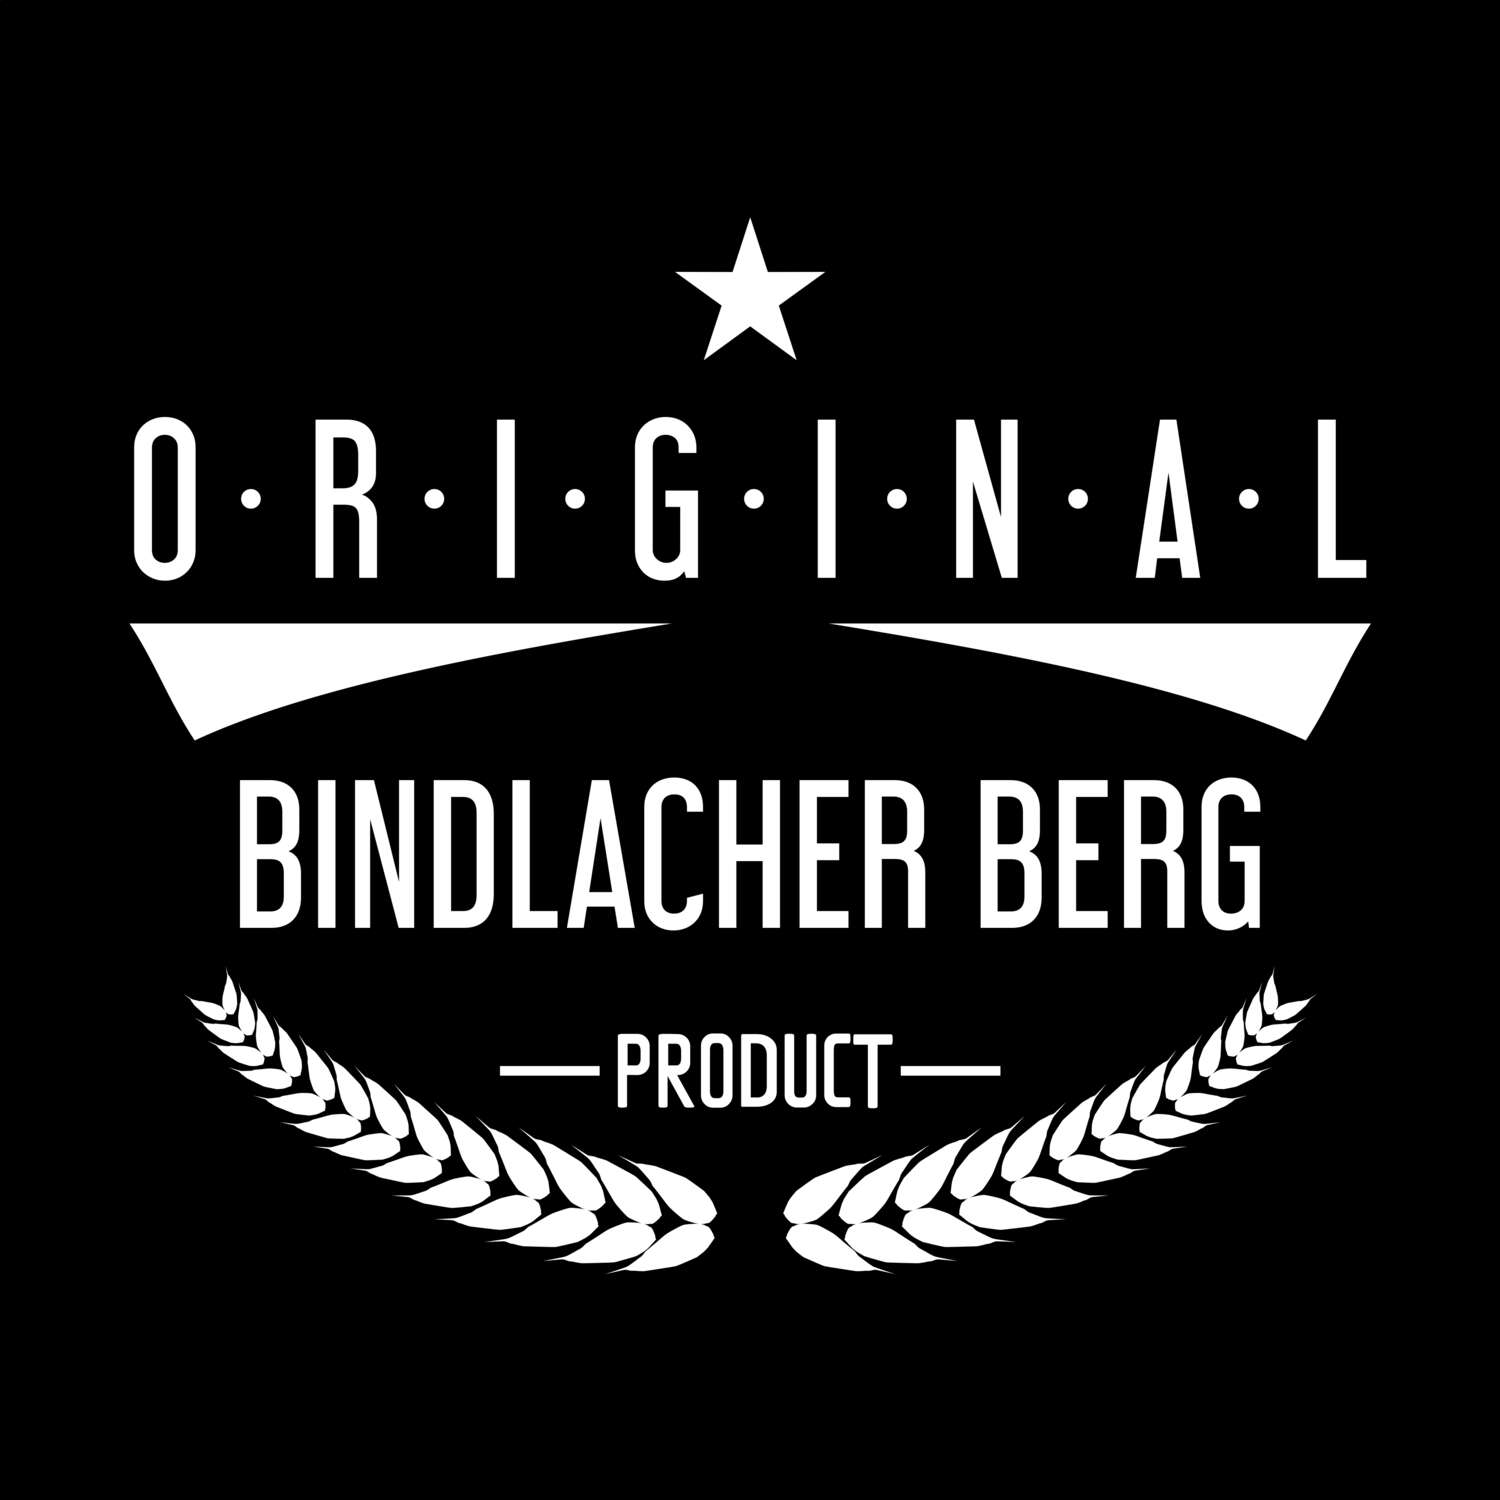 Bindlacher Berg T-Shirt »Original Product«